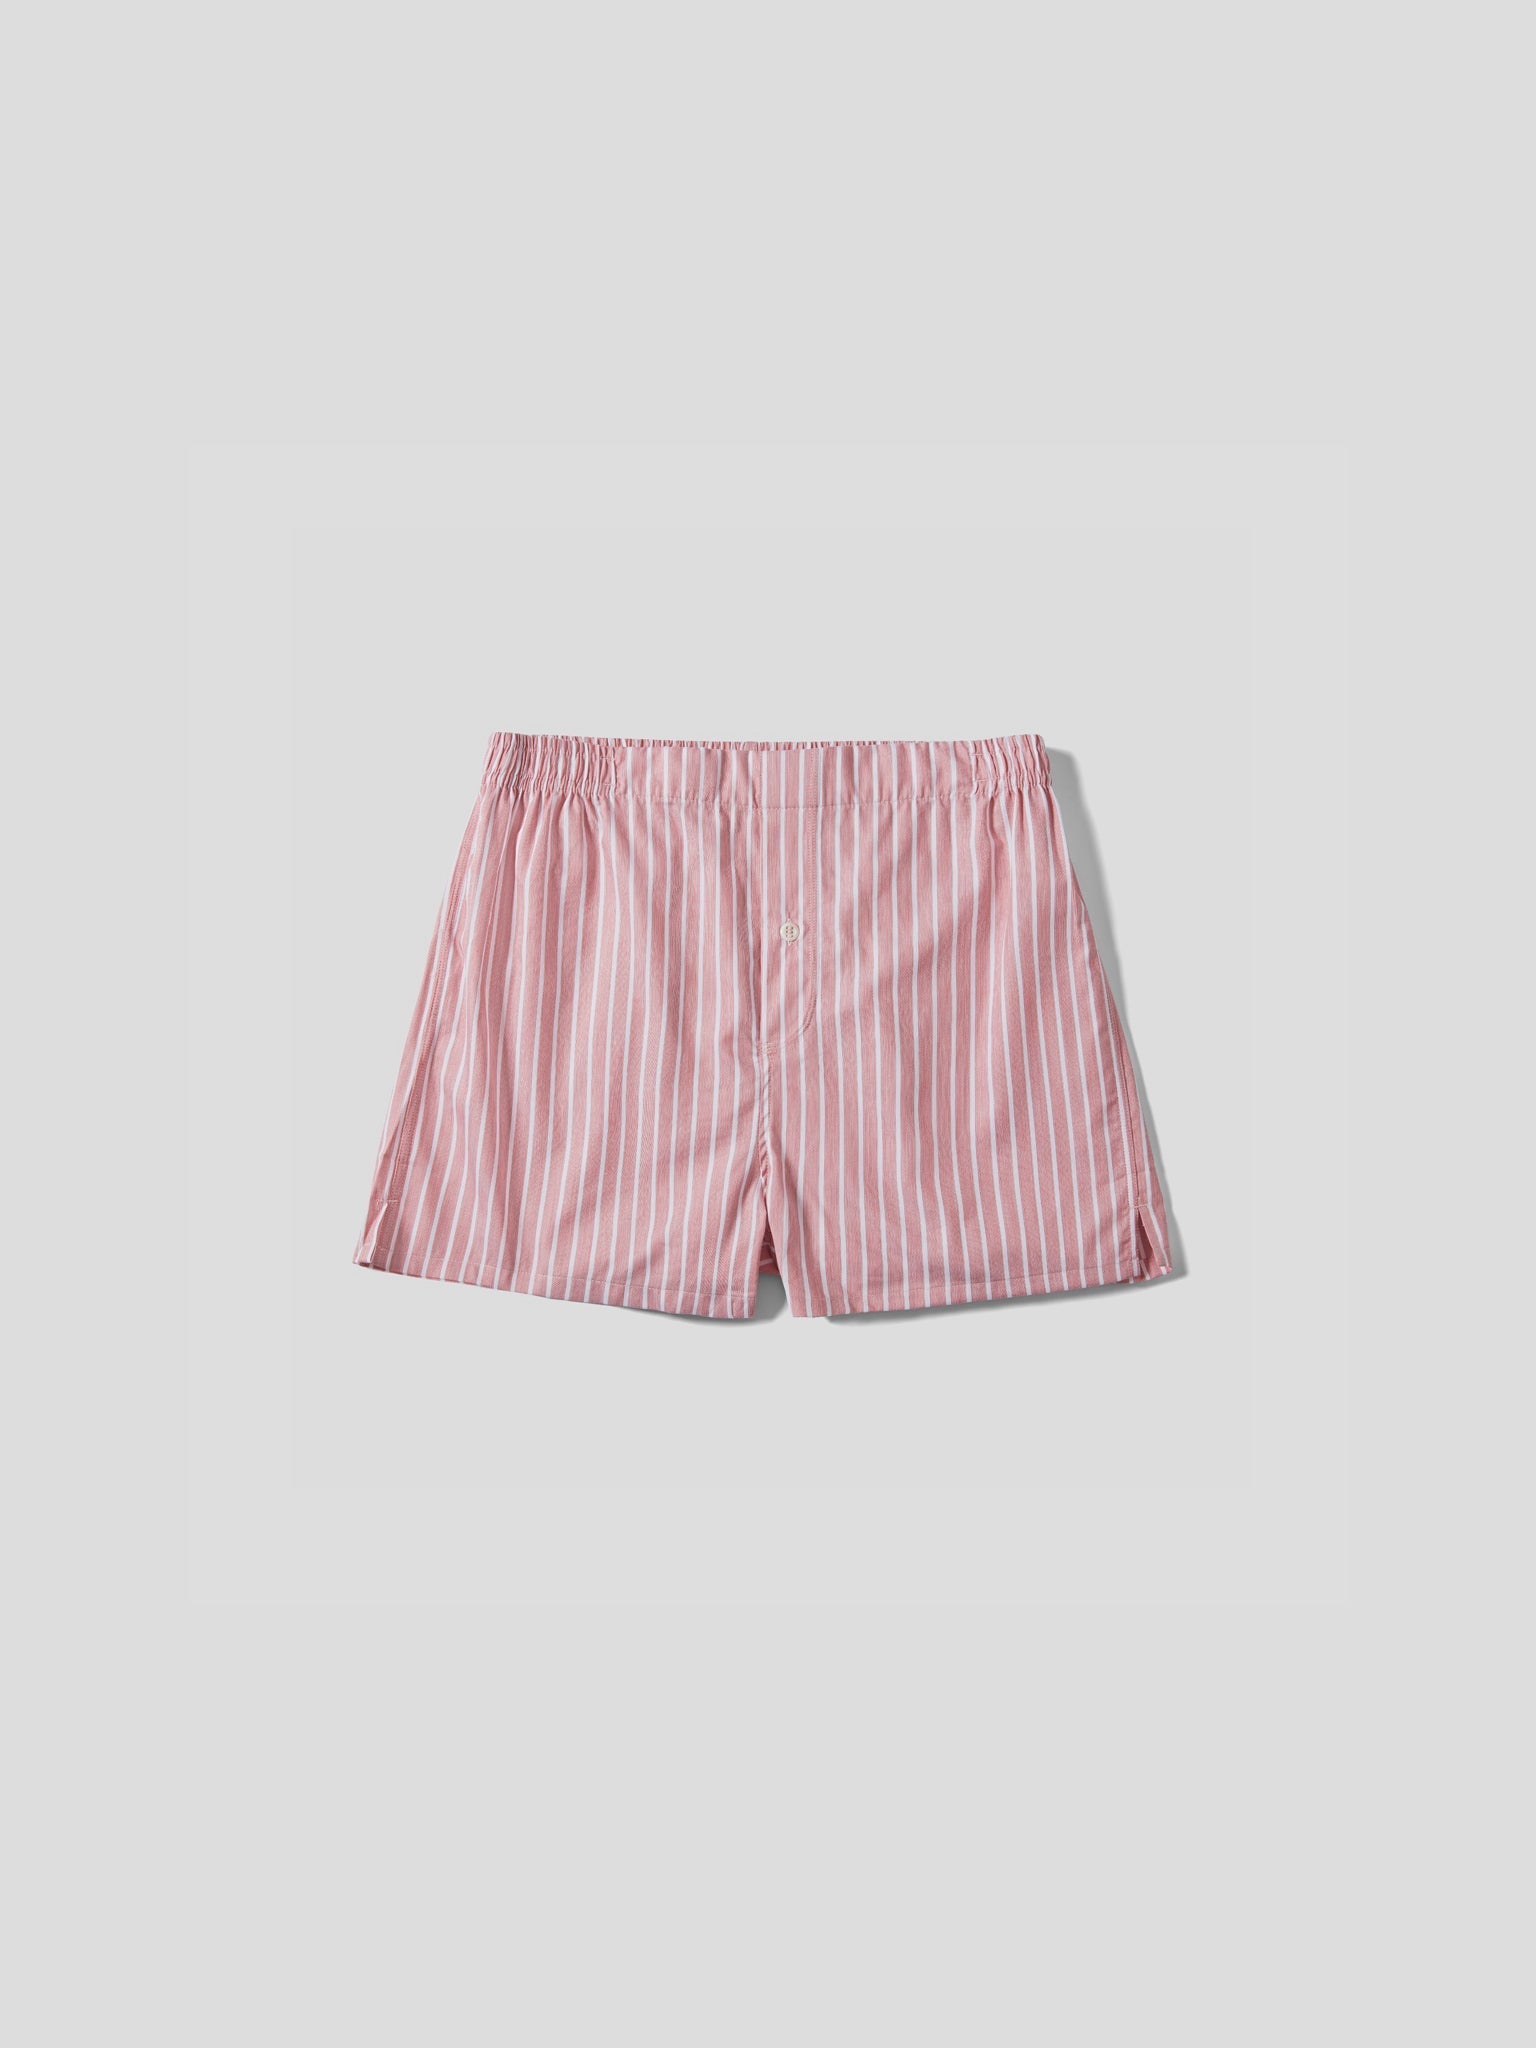 Next FOUR PACK - Boxer shorts - navy blue pink spot stripe/mottled